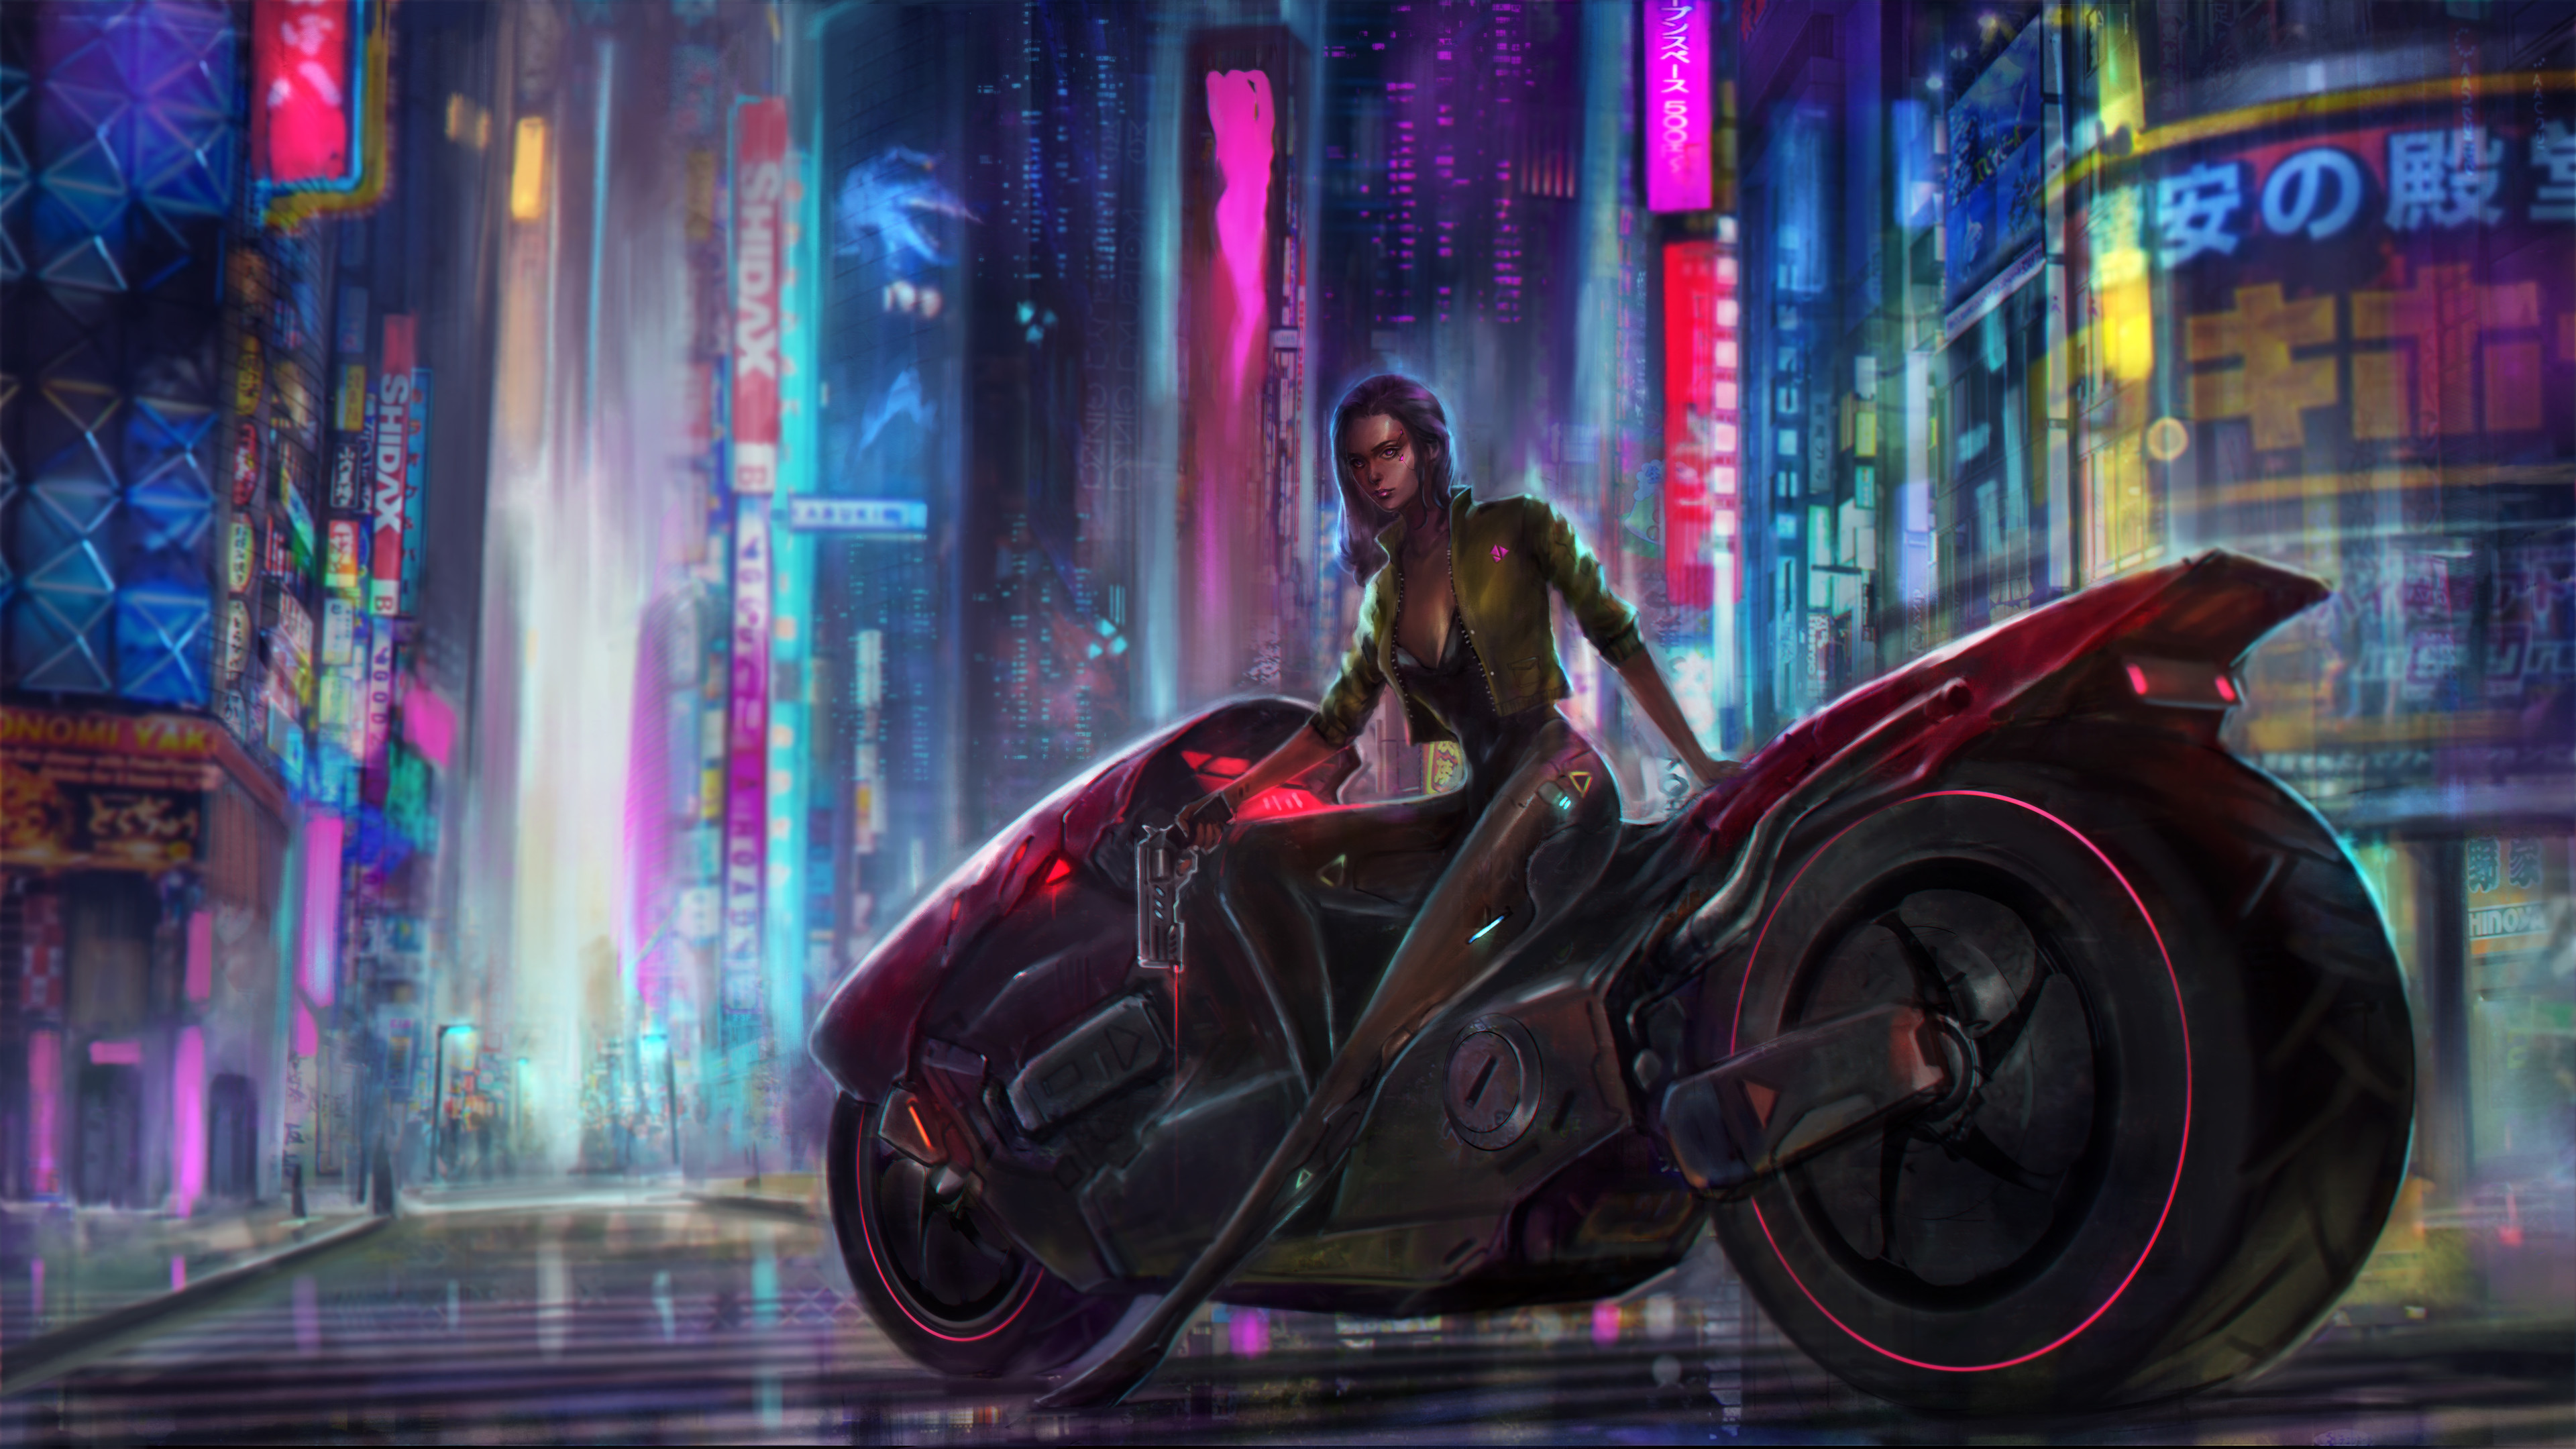 Cyberpunk Cyborg Futuristic Girl Motocycle Vehicle 3840x2160